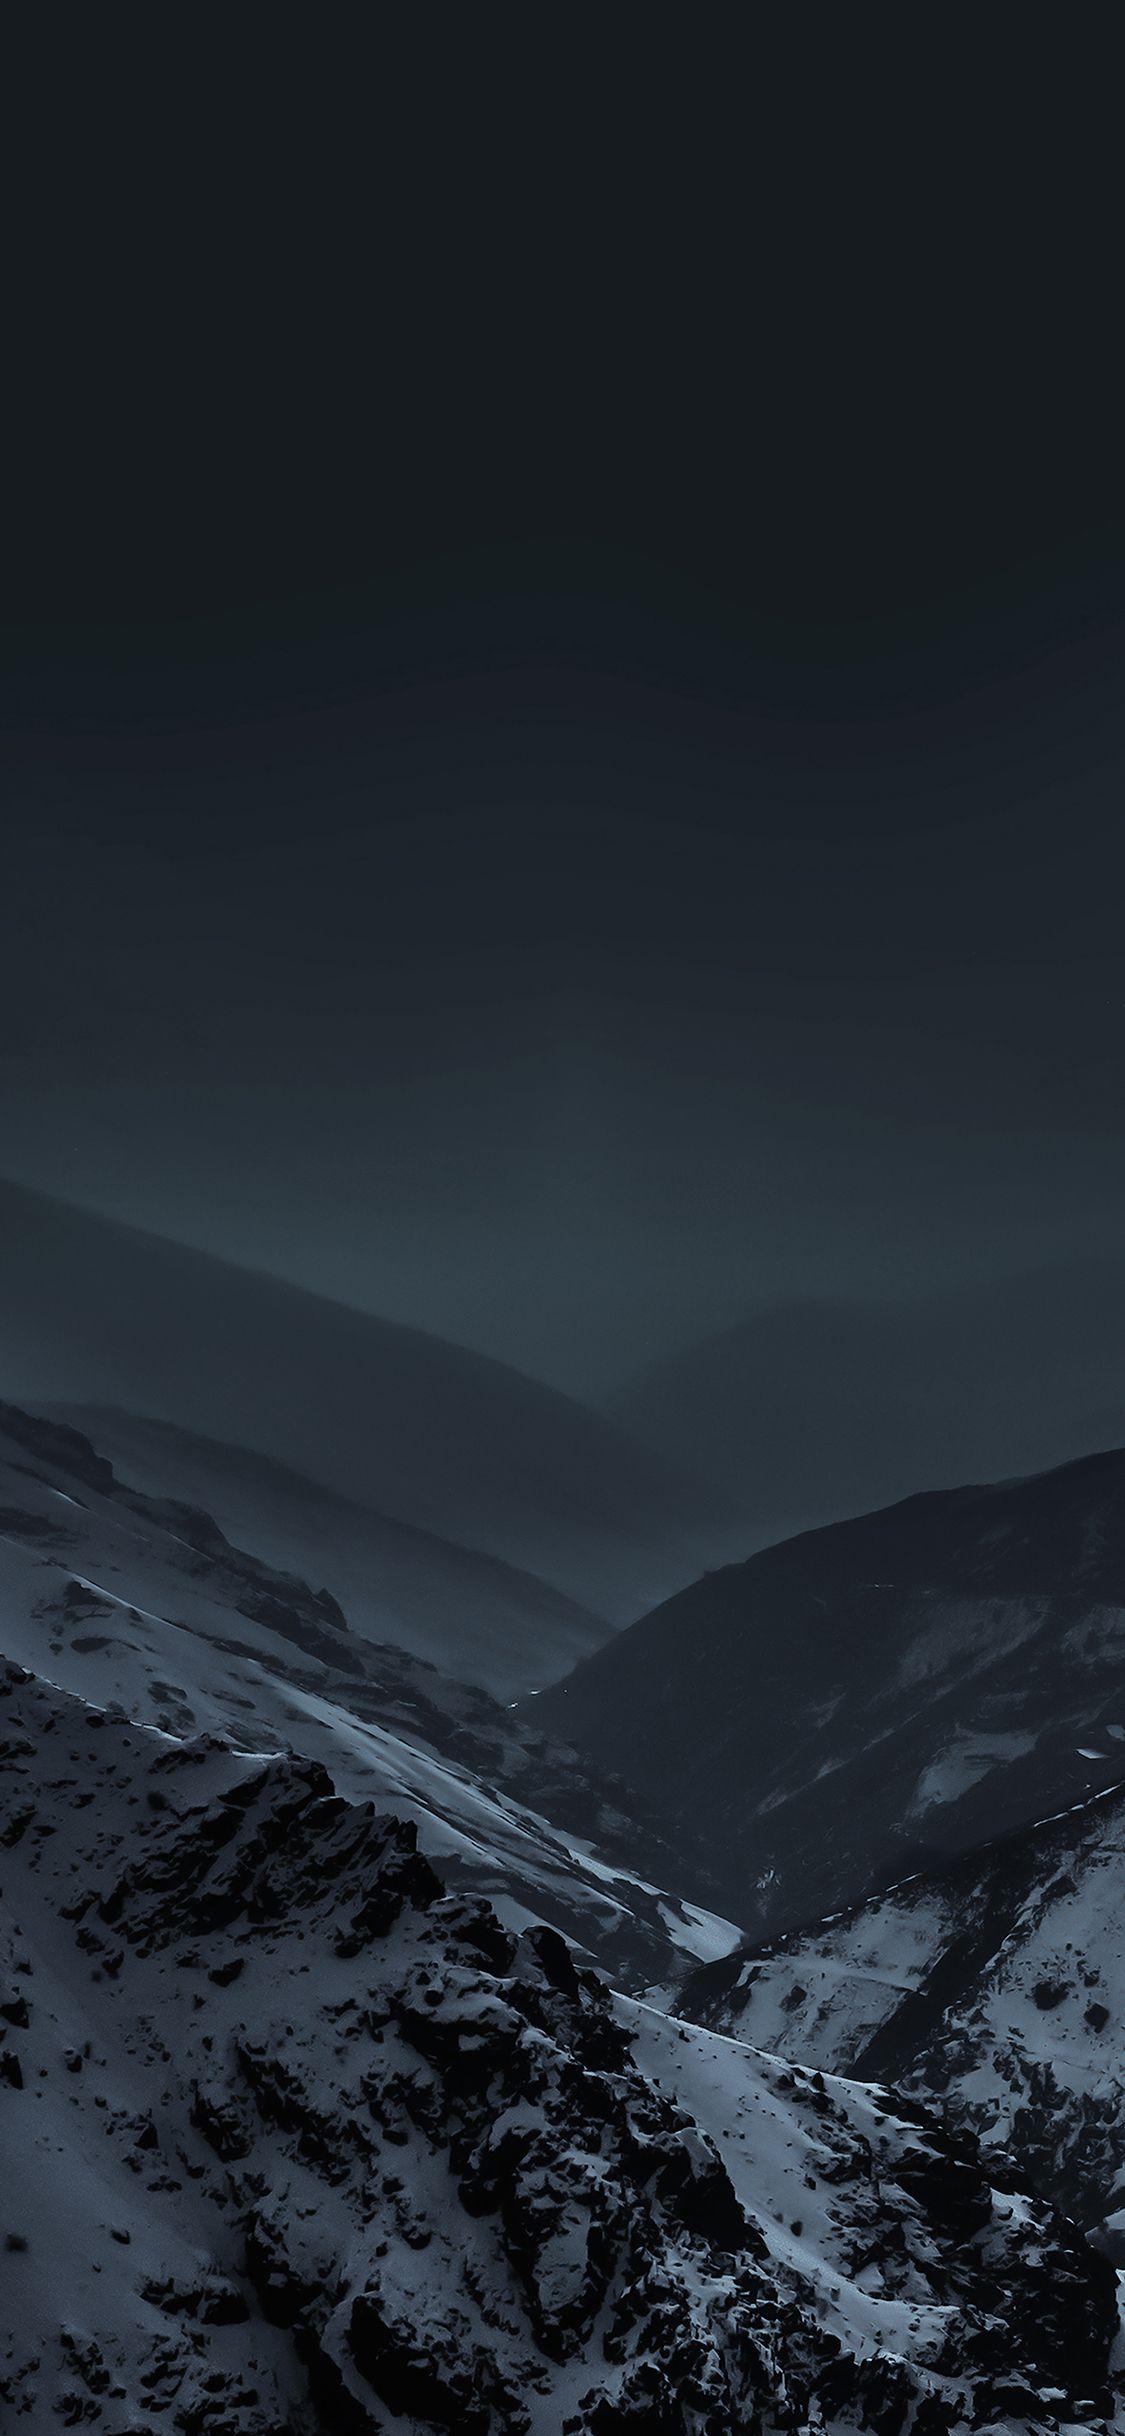 iPhone X Wallpaper 4k Mountain